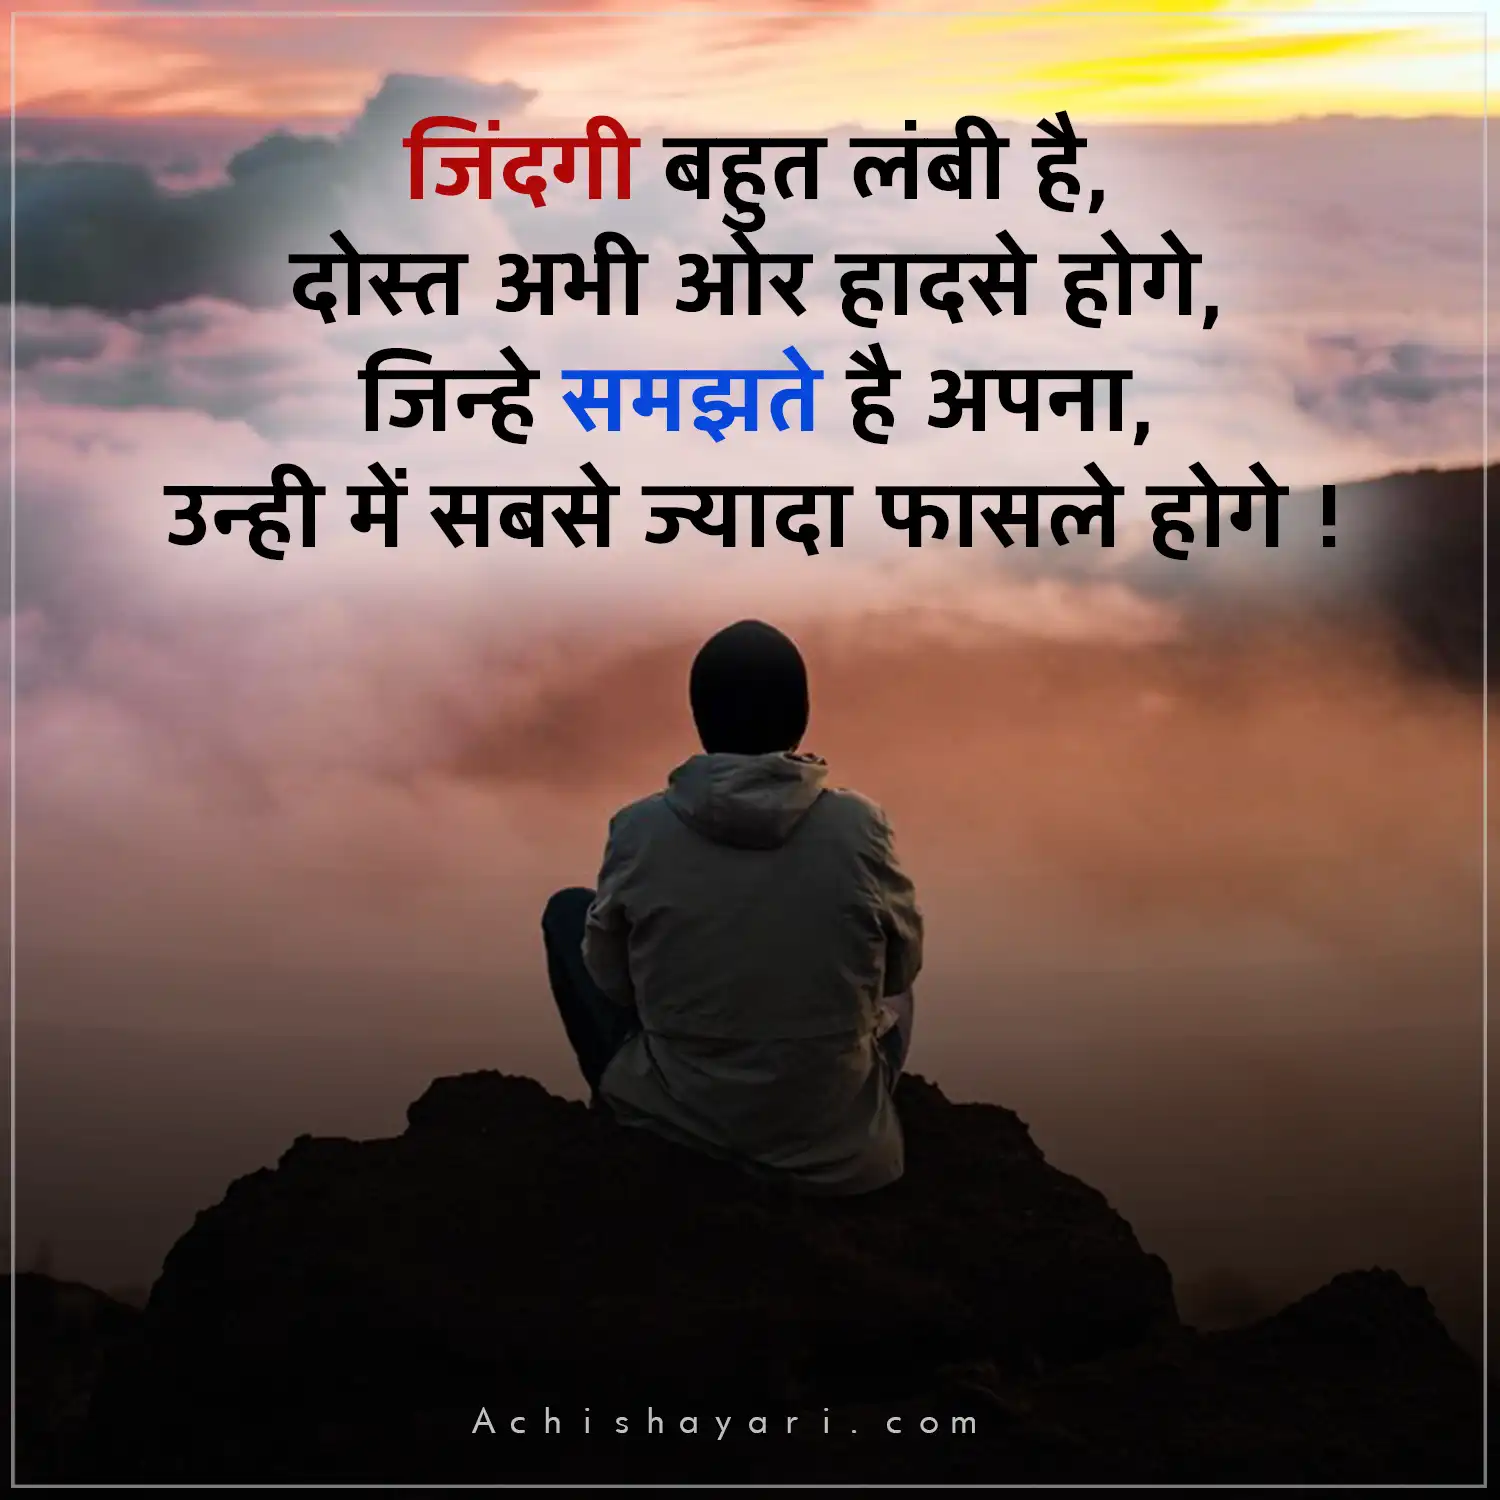 Hindi Quotes on Life